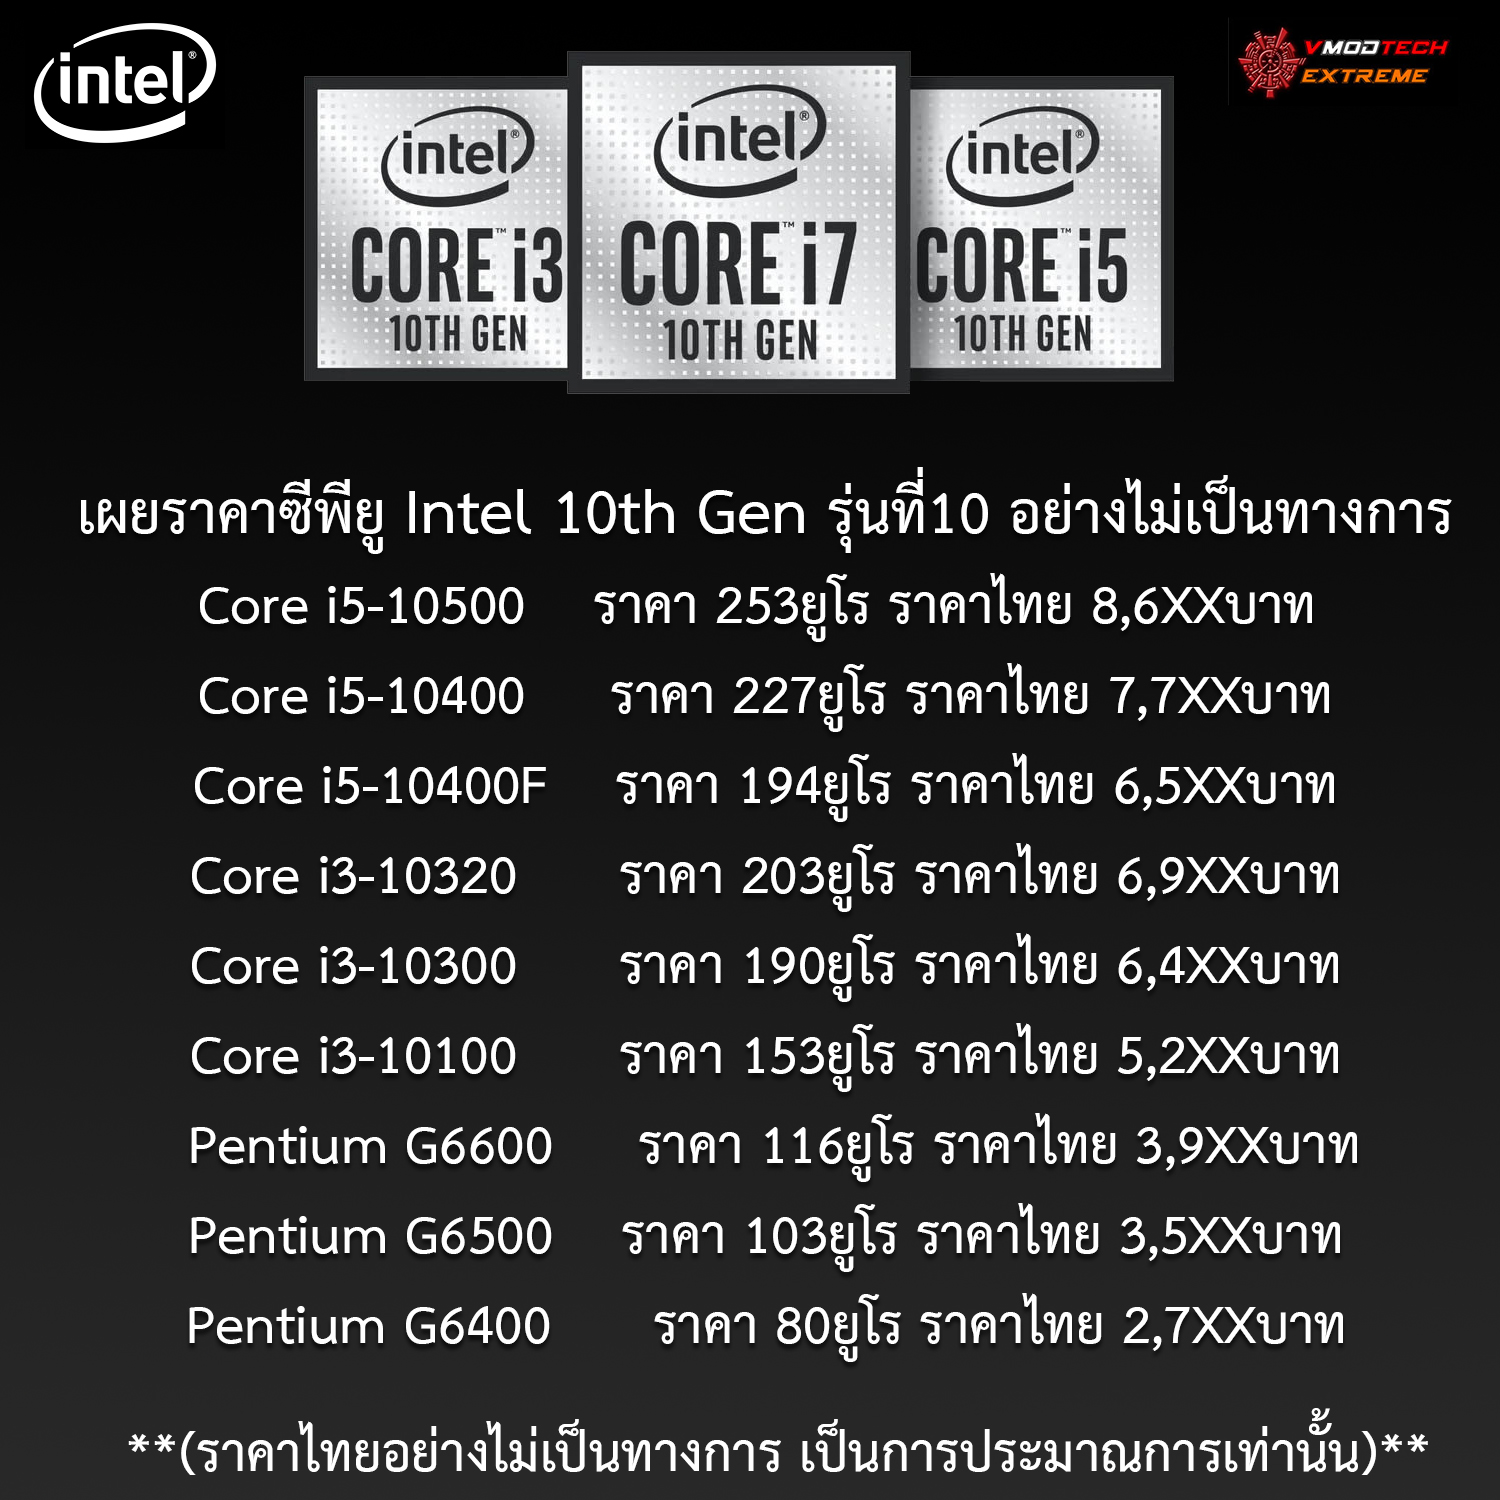 intel 10th gen price list1 หลุด!! เผยราคาซีพียู Intel 10th Gen รุ่นที่10 อย่างไม่เป็นทางการ Core i5 10600 เริ่มที่ 279ยูโร หรือประมาณ 9,4XXบาทไทยโดยประมาณ 